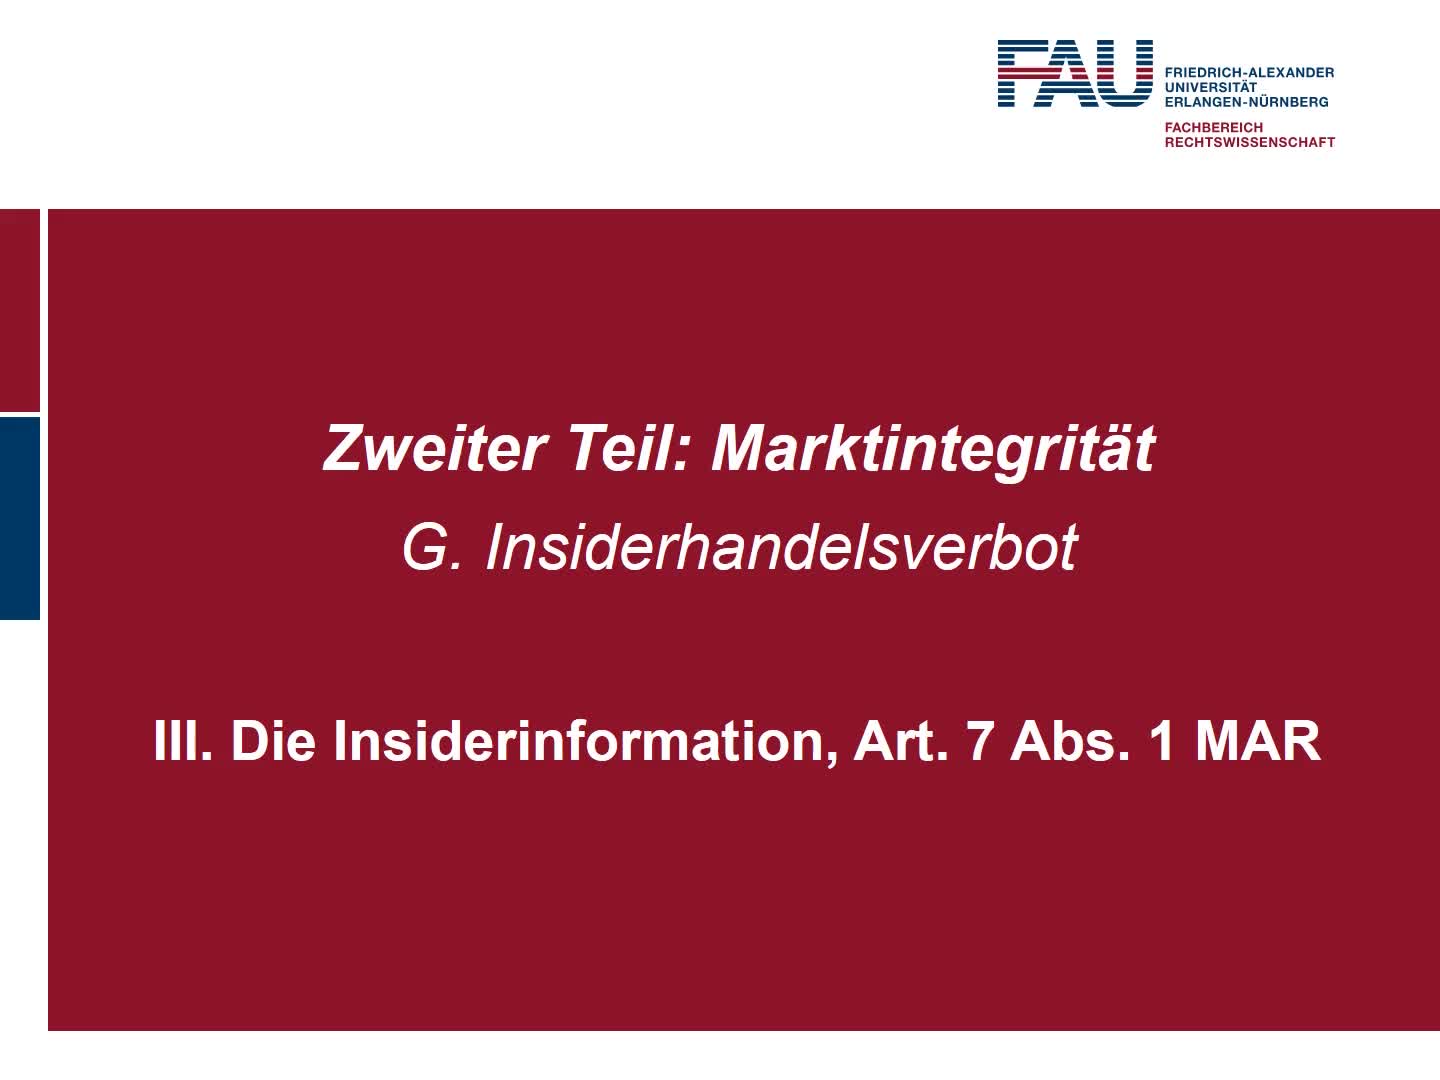 Die Insiderinformation, Art. 7 MAR (1) preview image